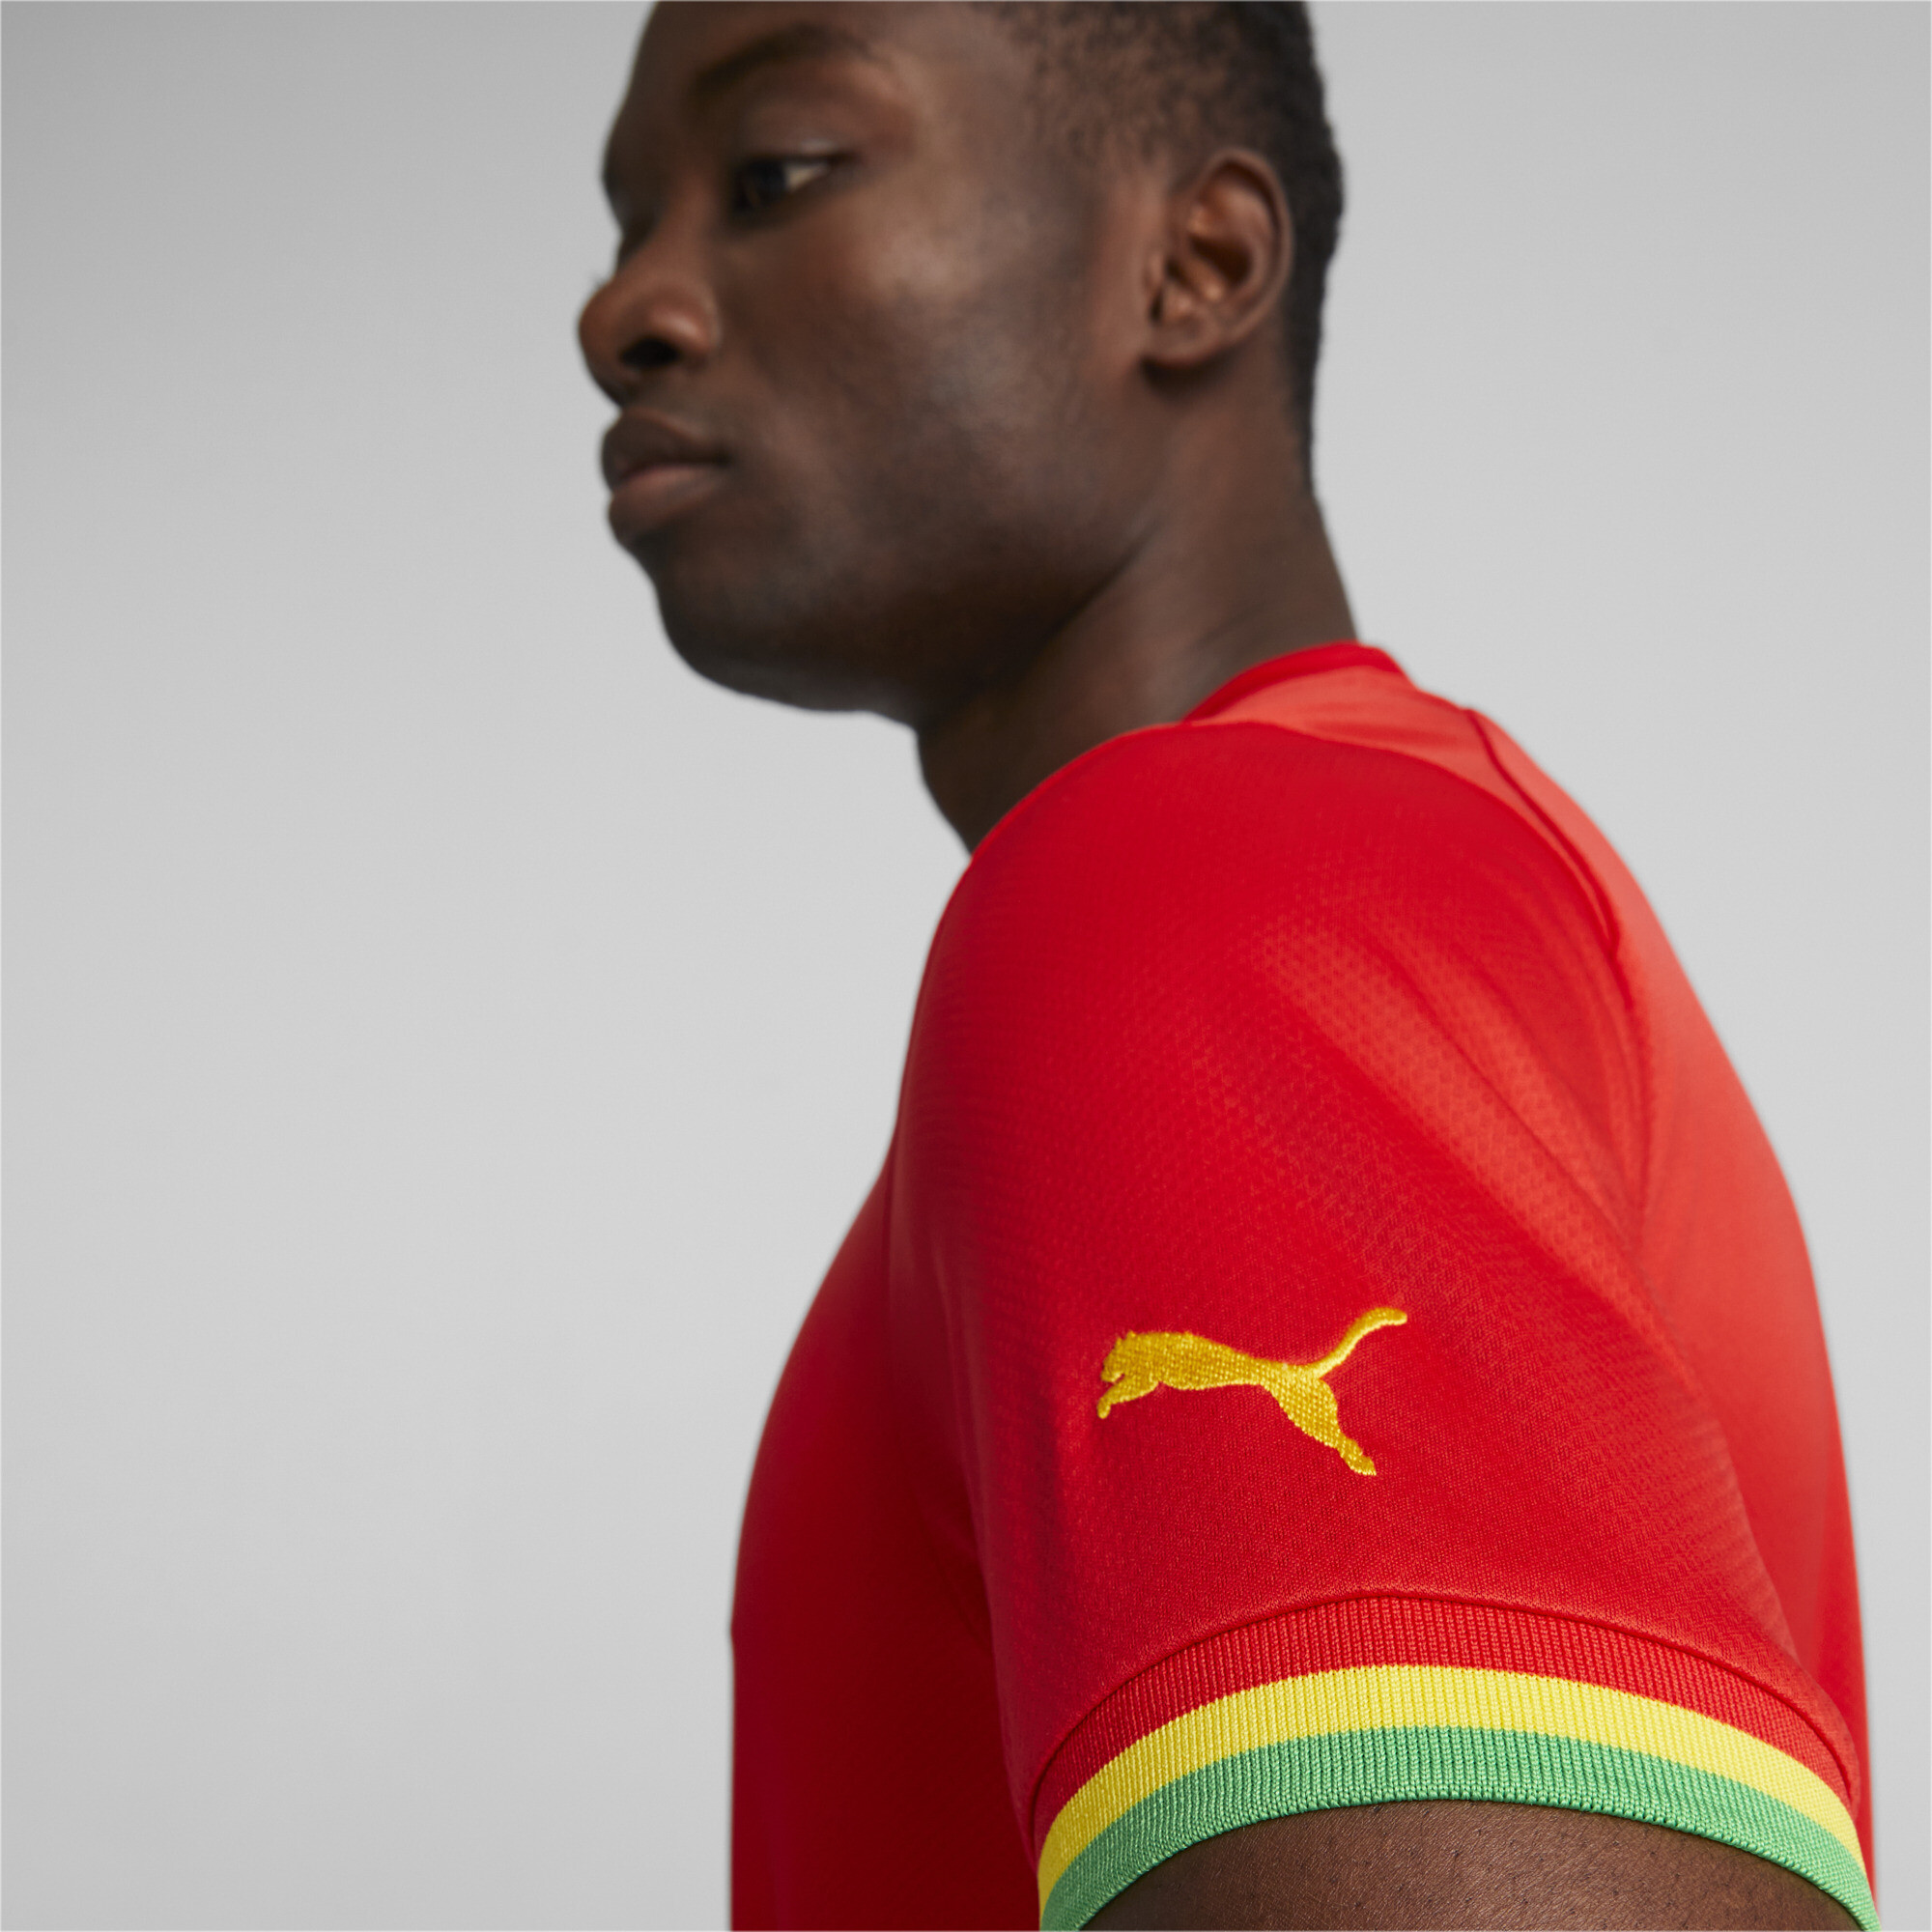 Men's Puma Ghana Away 22/23 Replica Jersey, Red, Size 3XL, Clothing